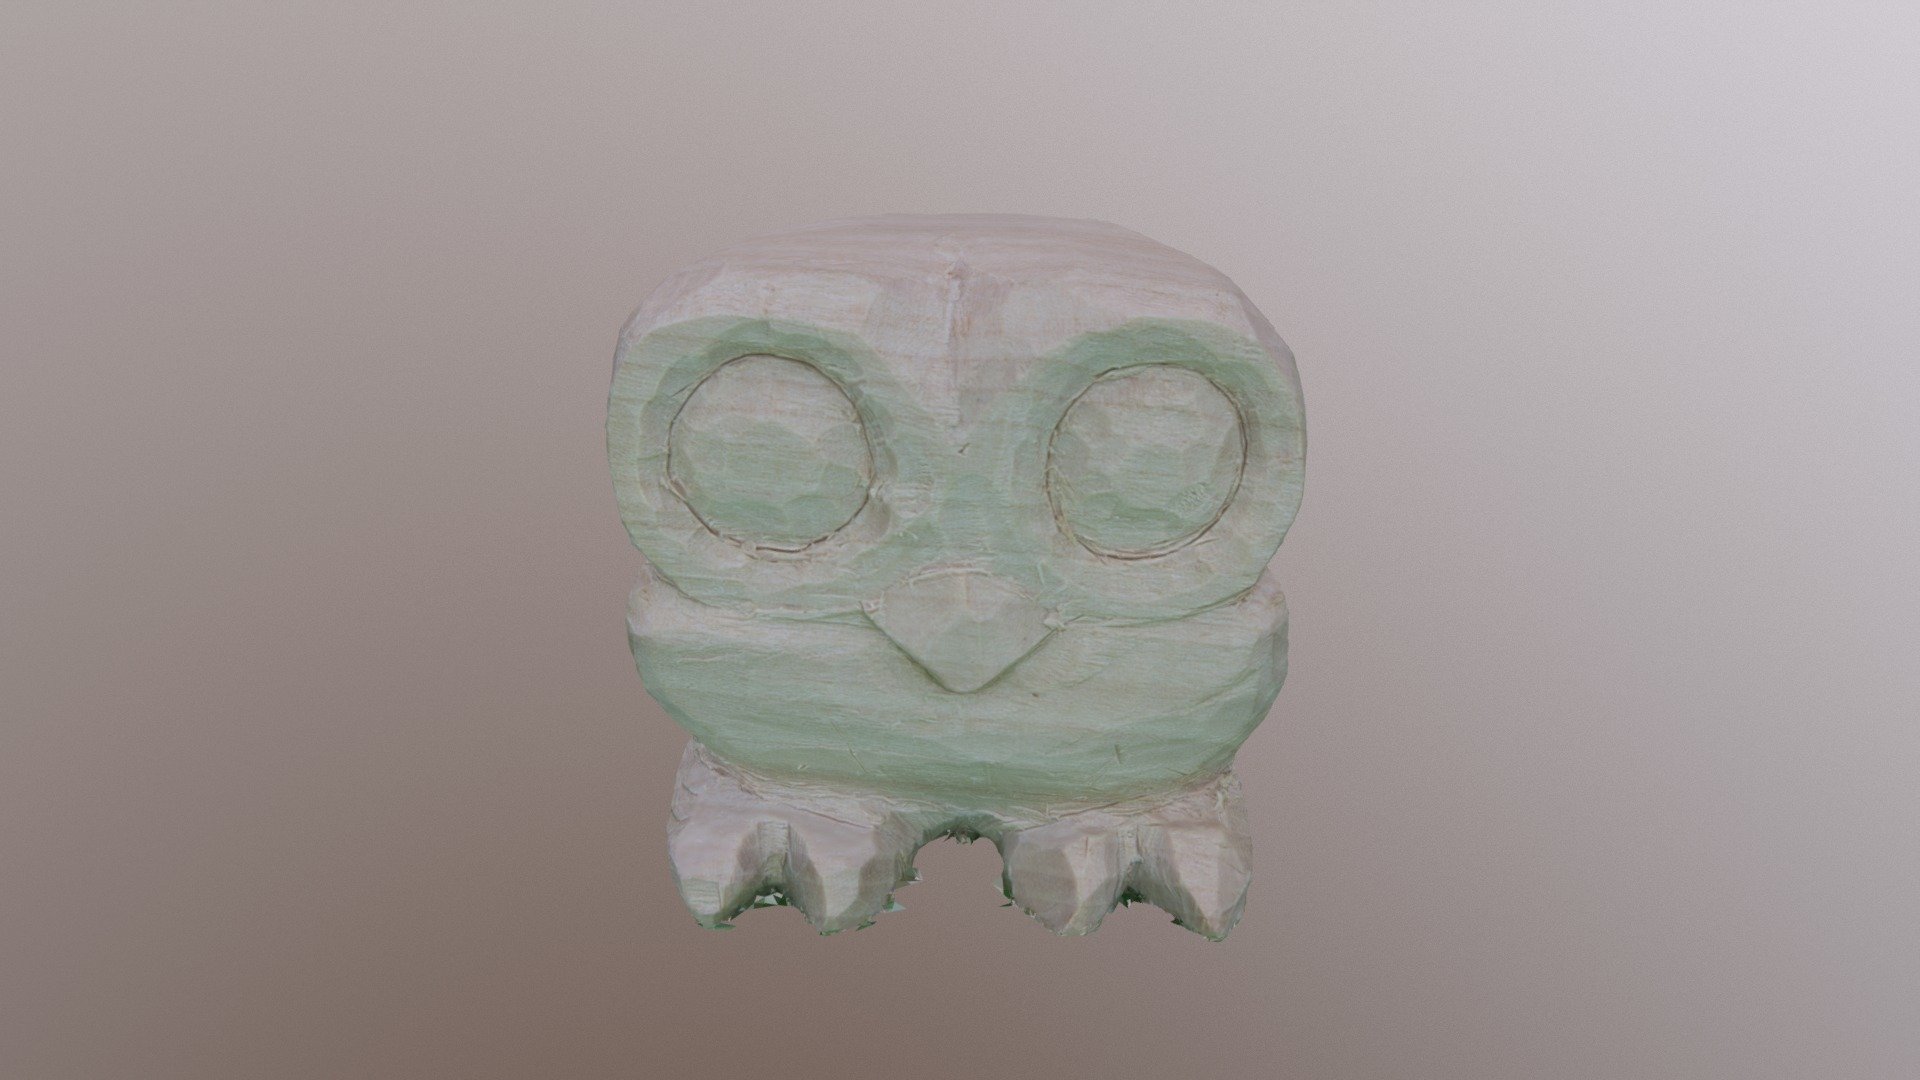 Owl Sculpture from Photos